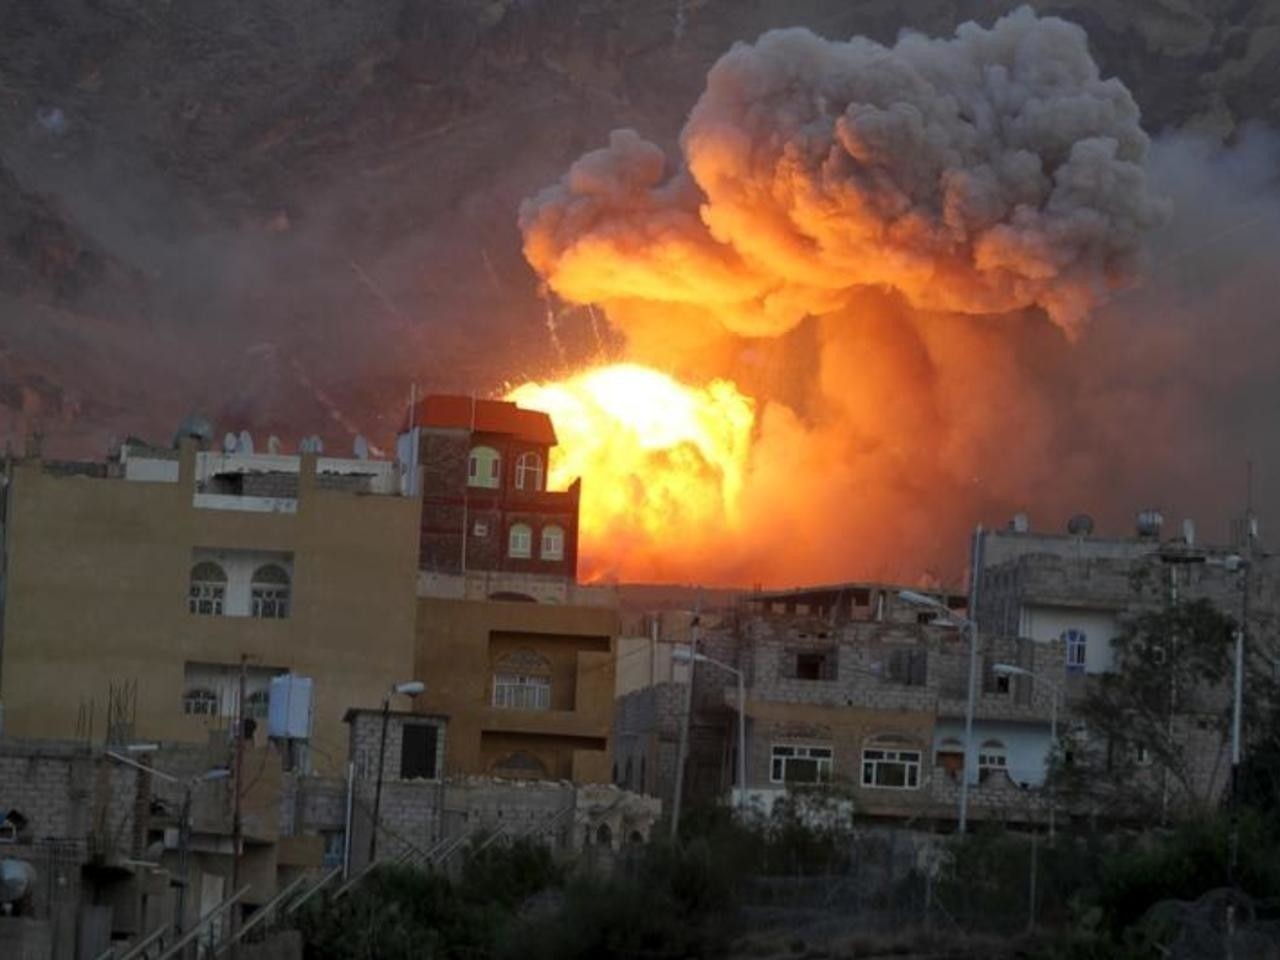 Aggression warplanes launch 21 raids on Marib